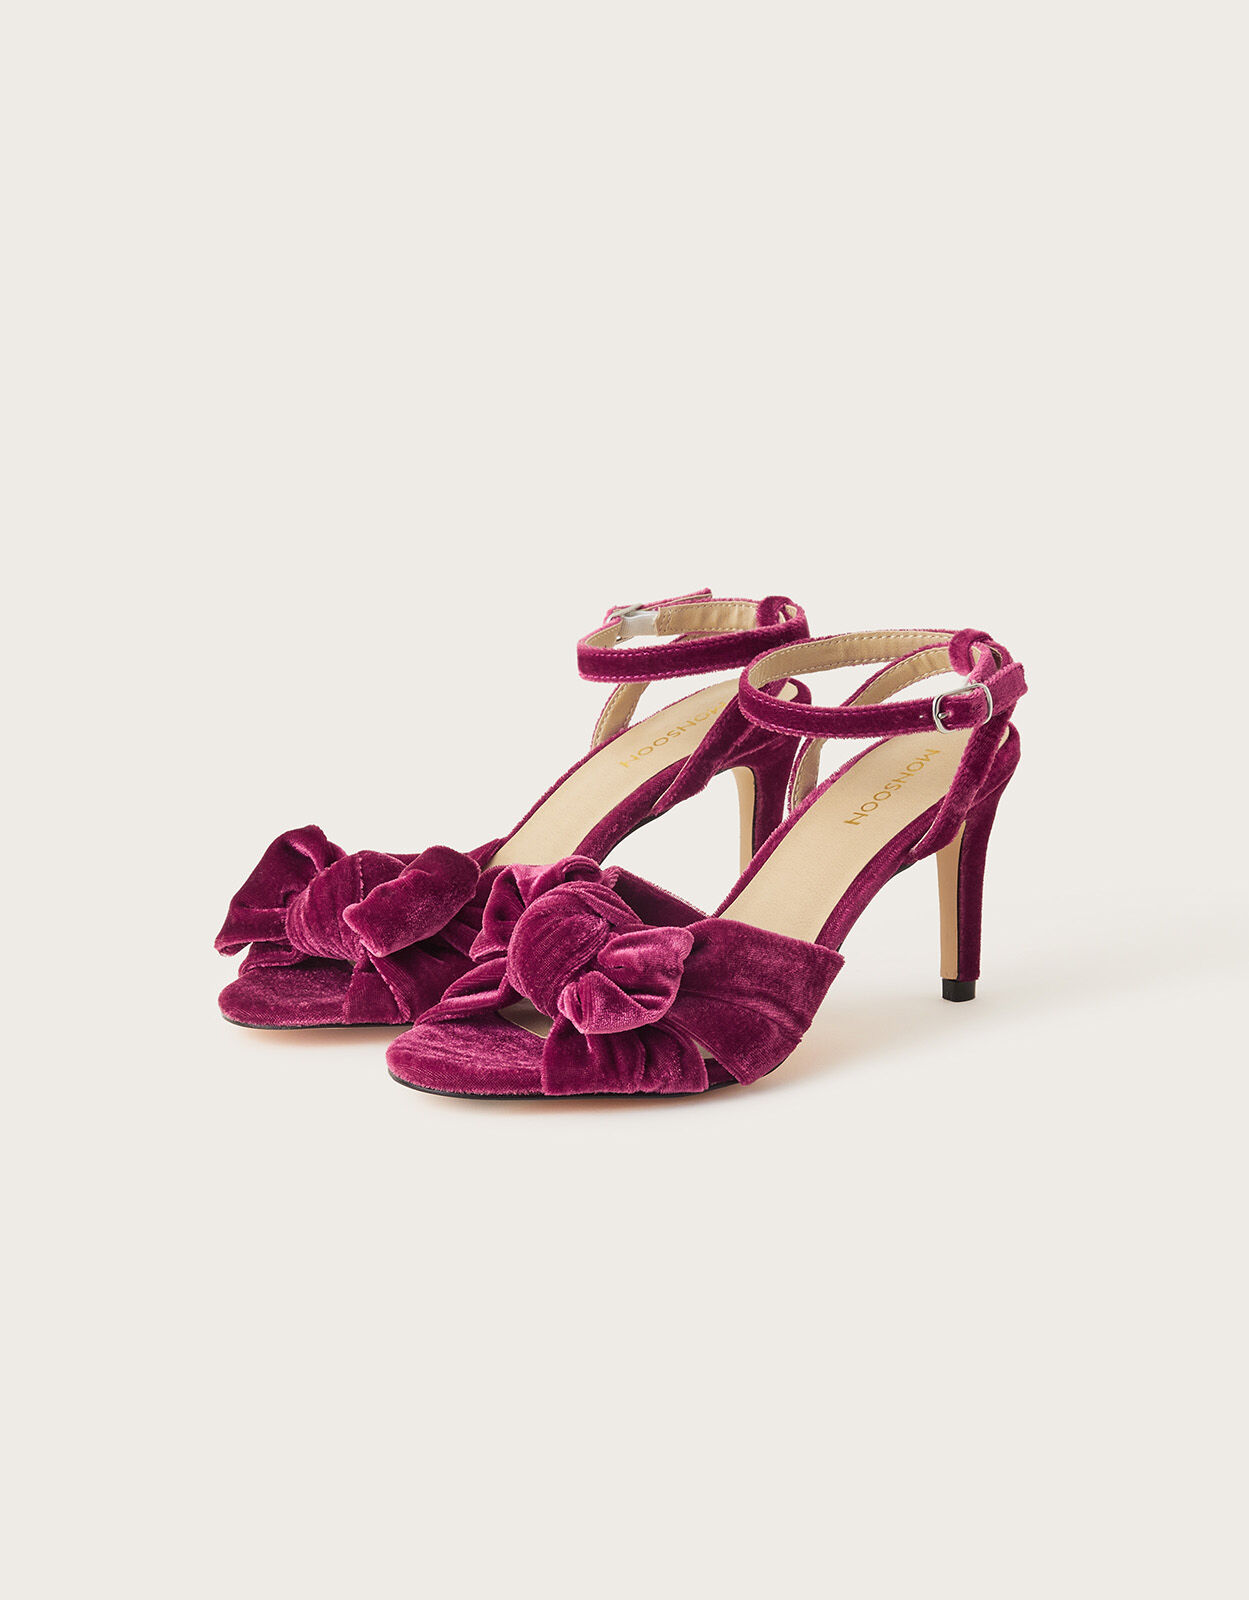 Dina heels purple clogs suede top Shoes Girls Shoes Heels 